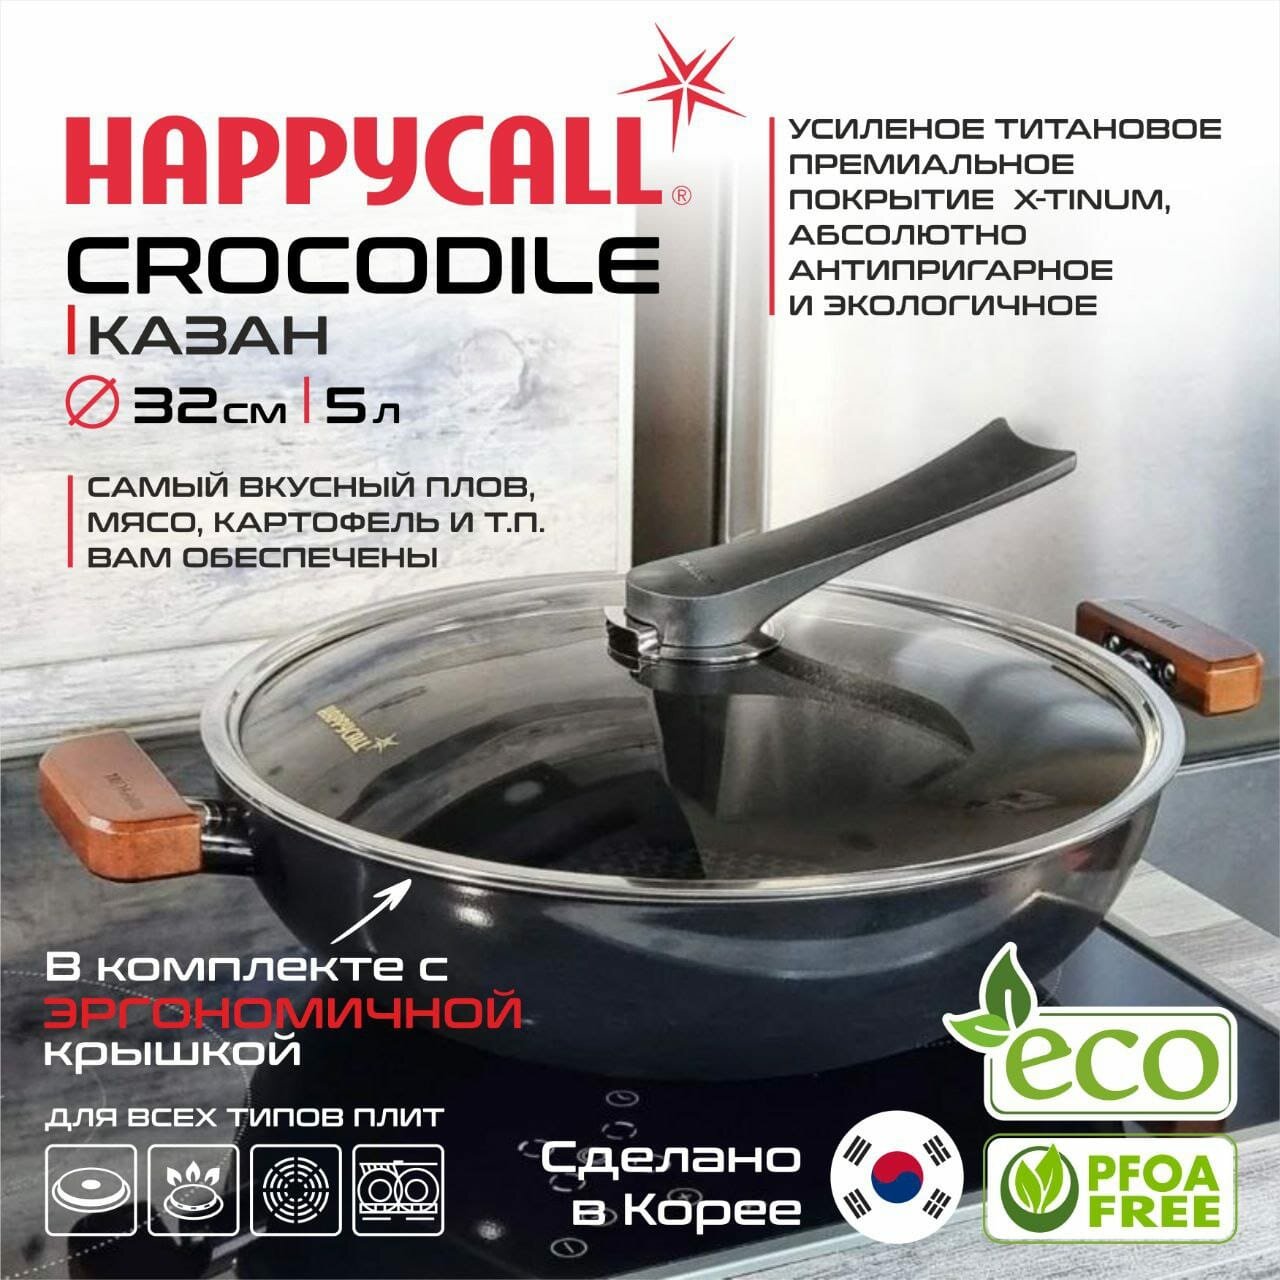 Казан Happycall Crocodile 32см